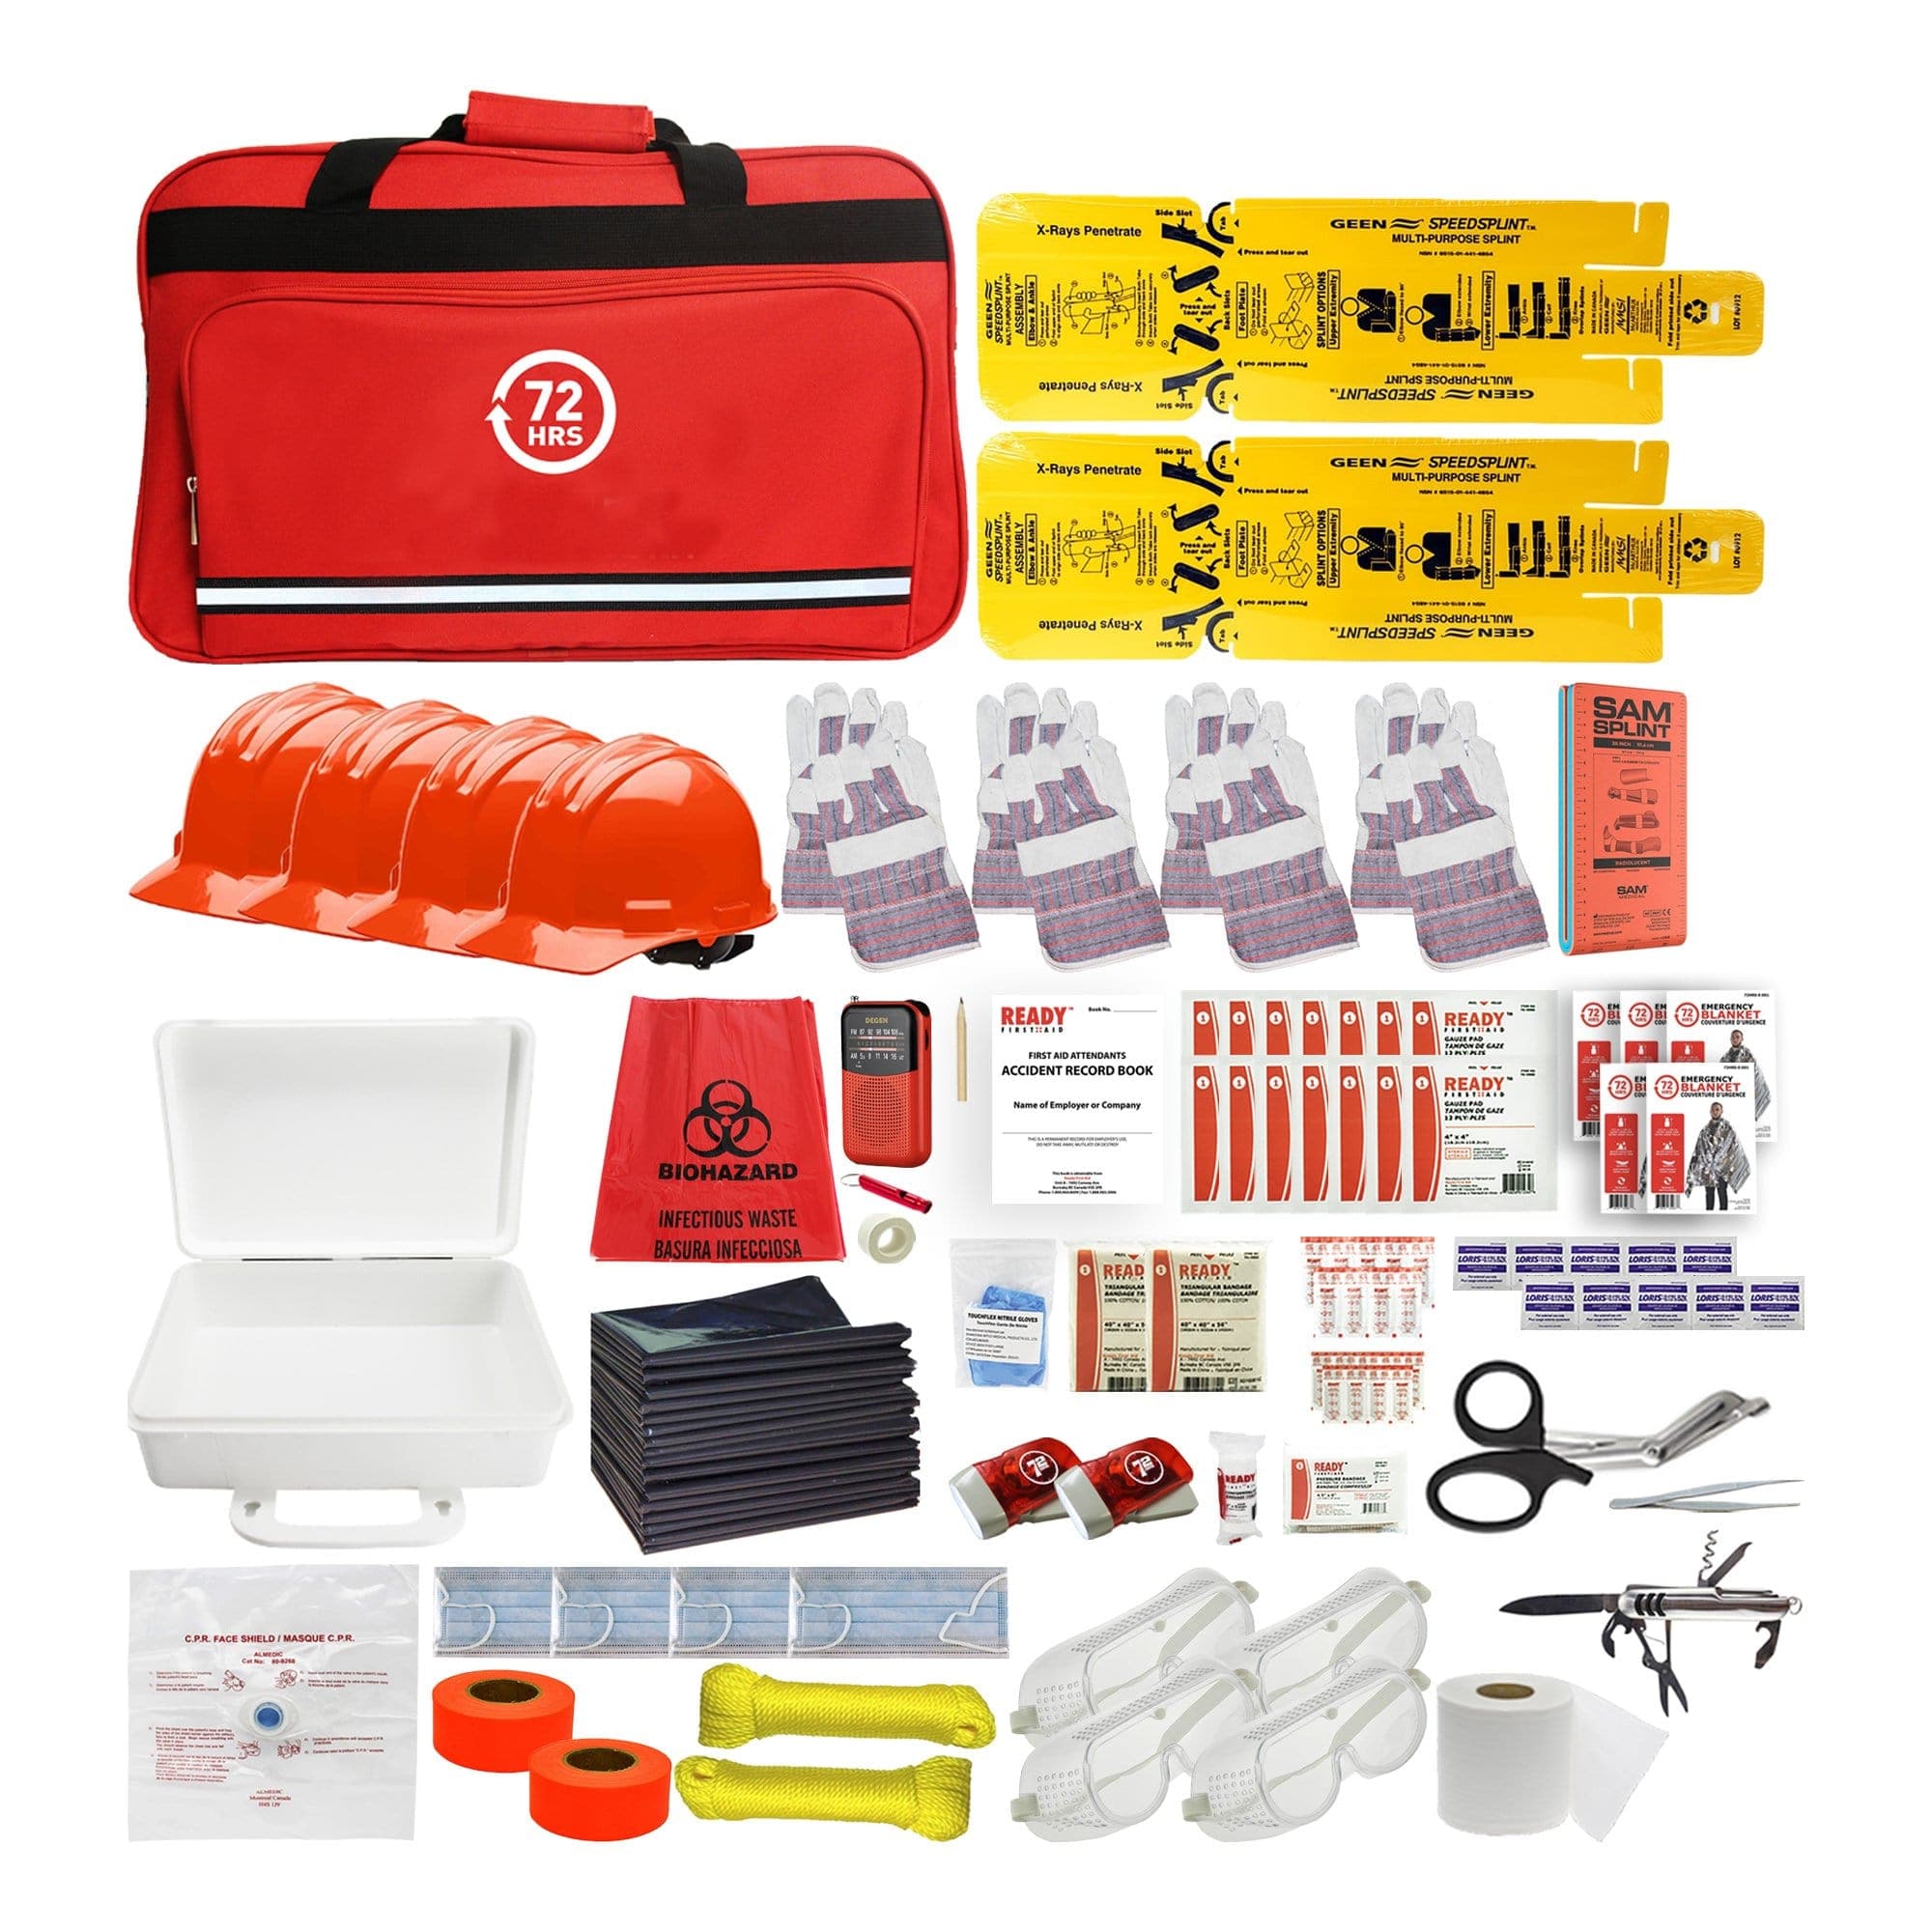 School Emergency Survival Kit from